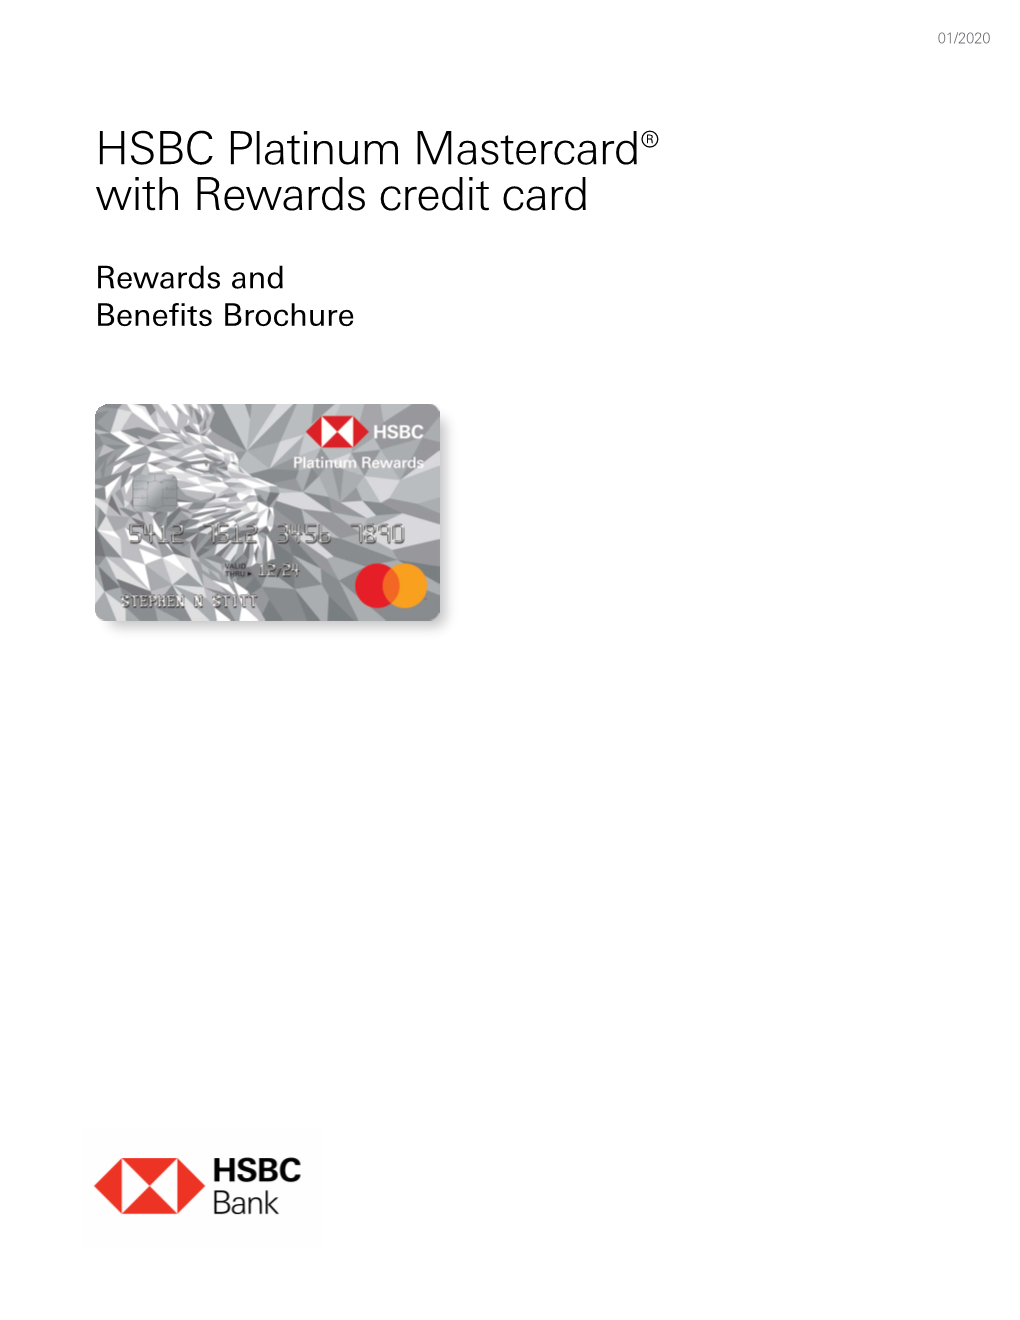 HSBC Platinum Mastercard® with Rewards Credit Card